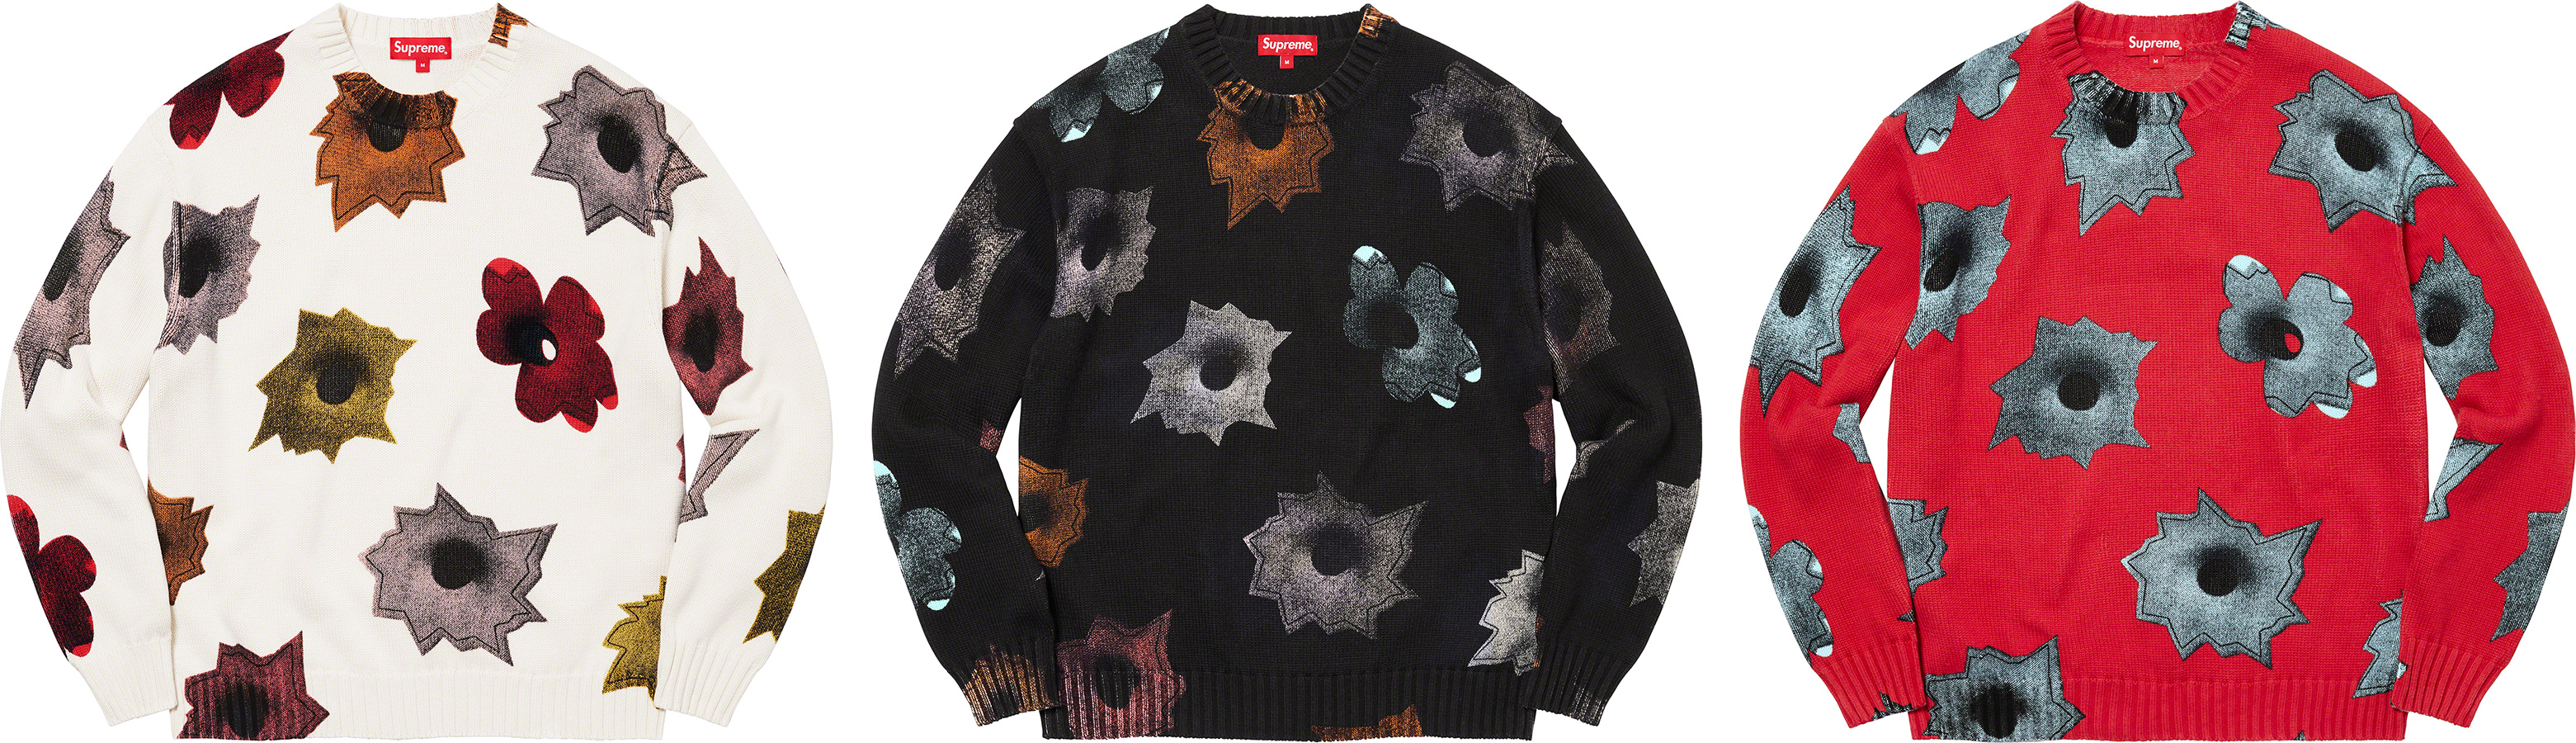 Supreme - Nate Lowman Sweater ブラック